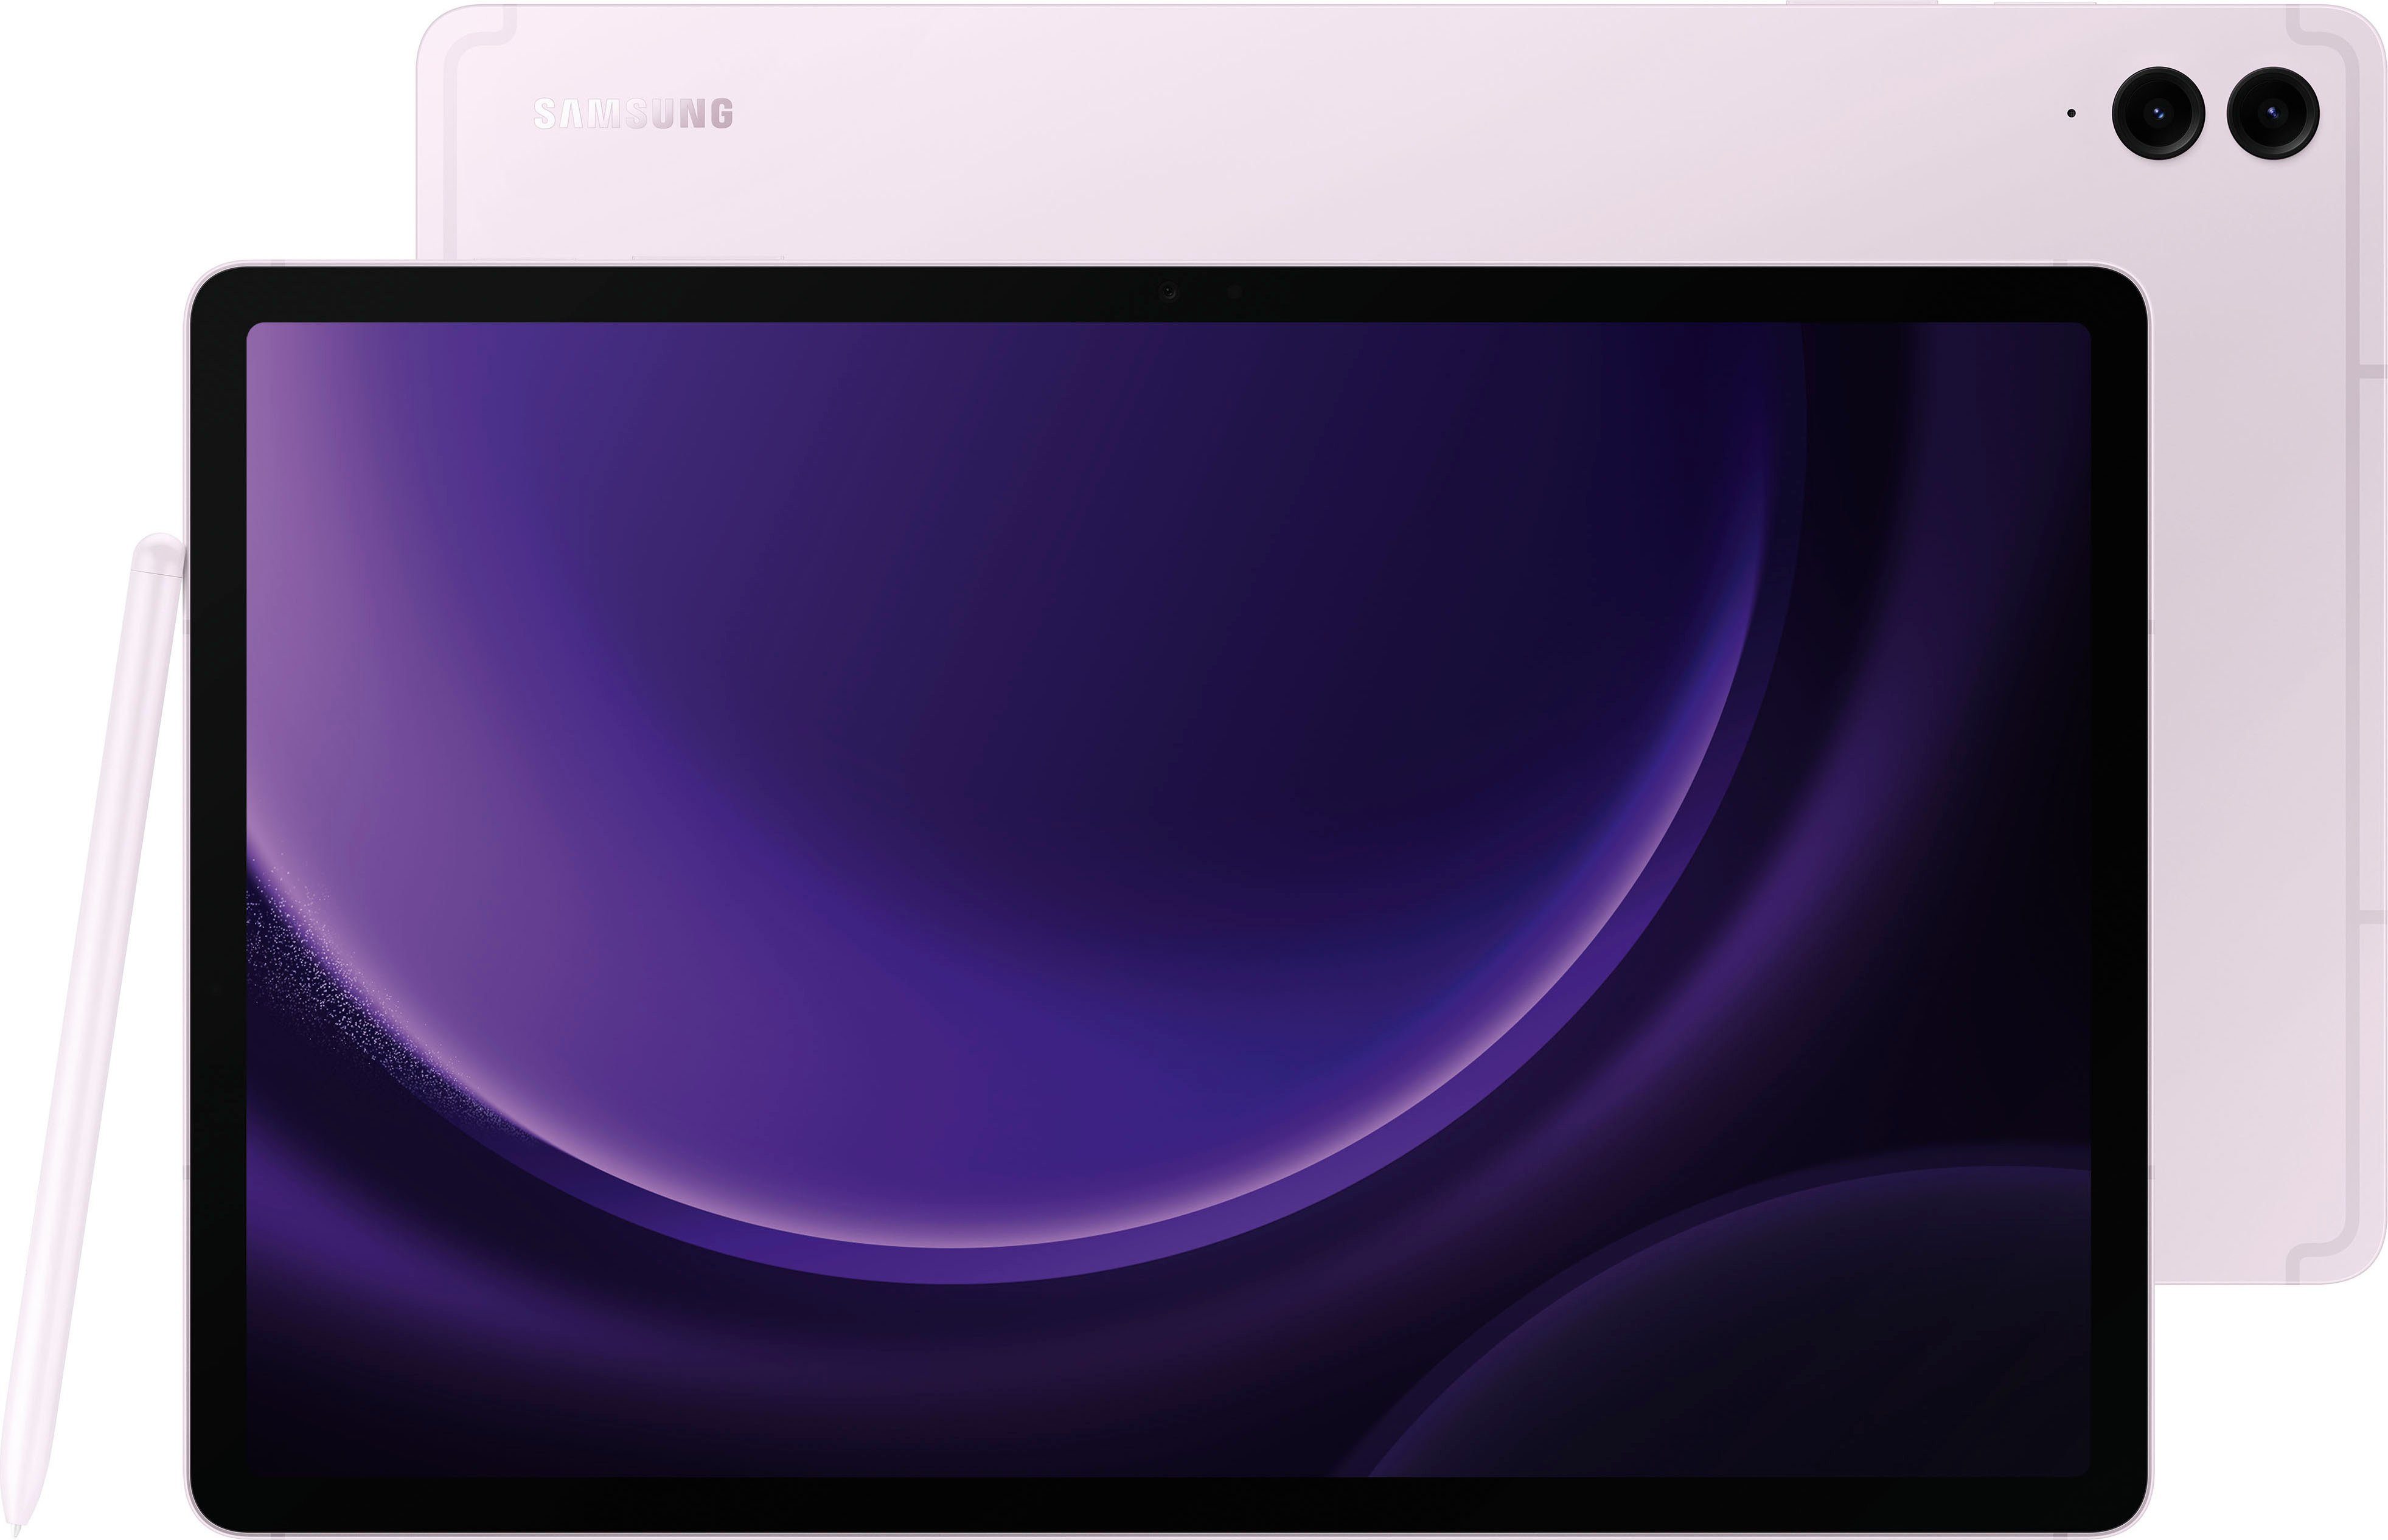 128 lavender Tab GB, Android,One Samsung Galaxy FE+ (12,4", Tablet UI,Knox) S9